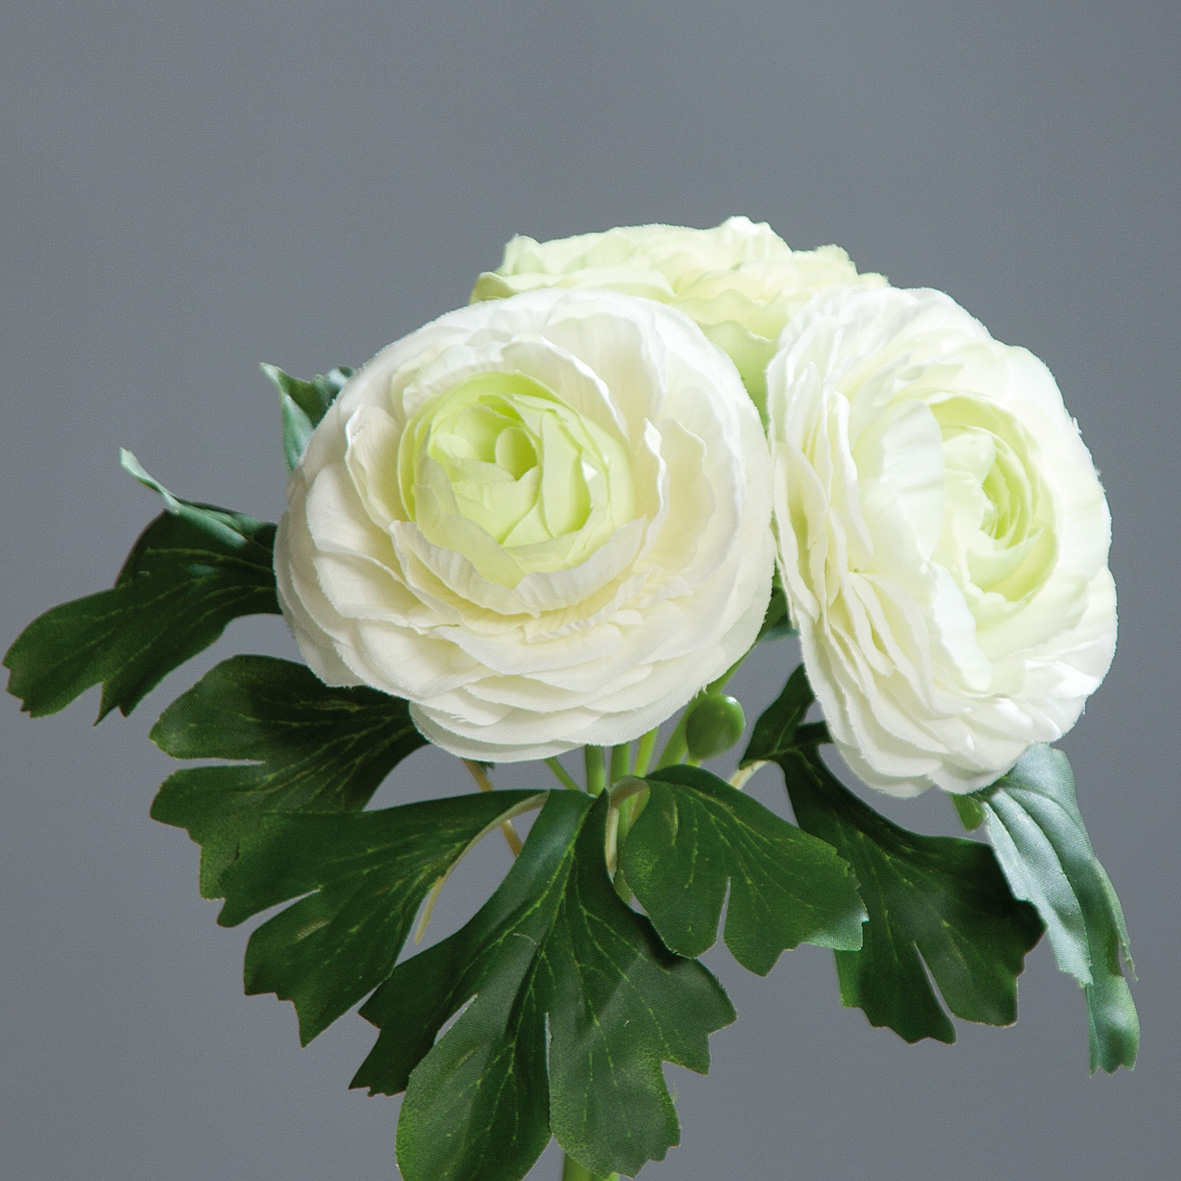 Ranunkelbouquet 20cm weiß DP Kunstblumen künstliche Ranunkel Blumen künstlicher Strauß